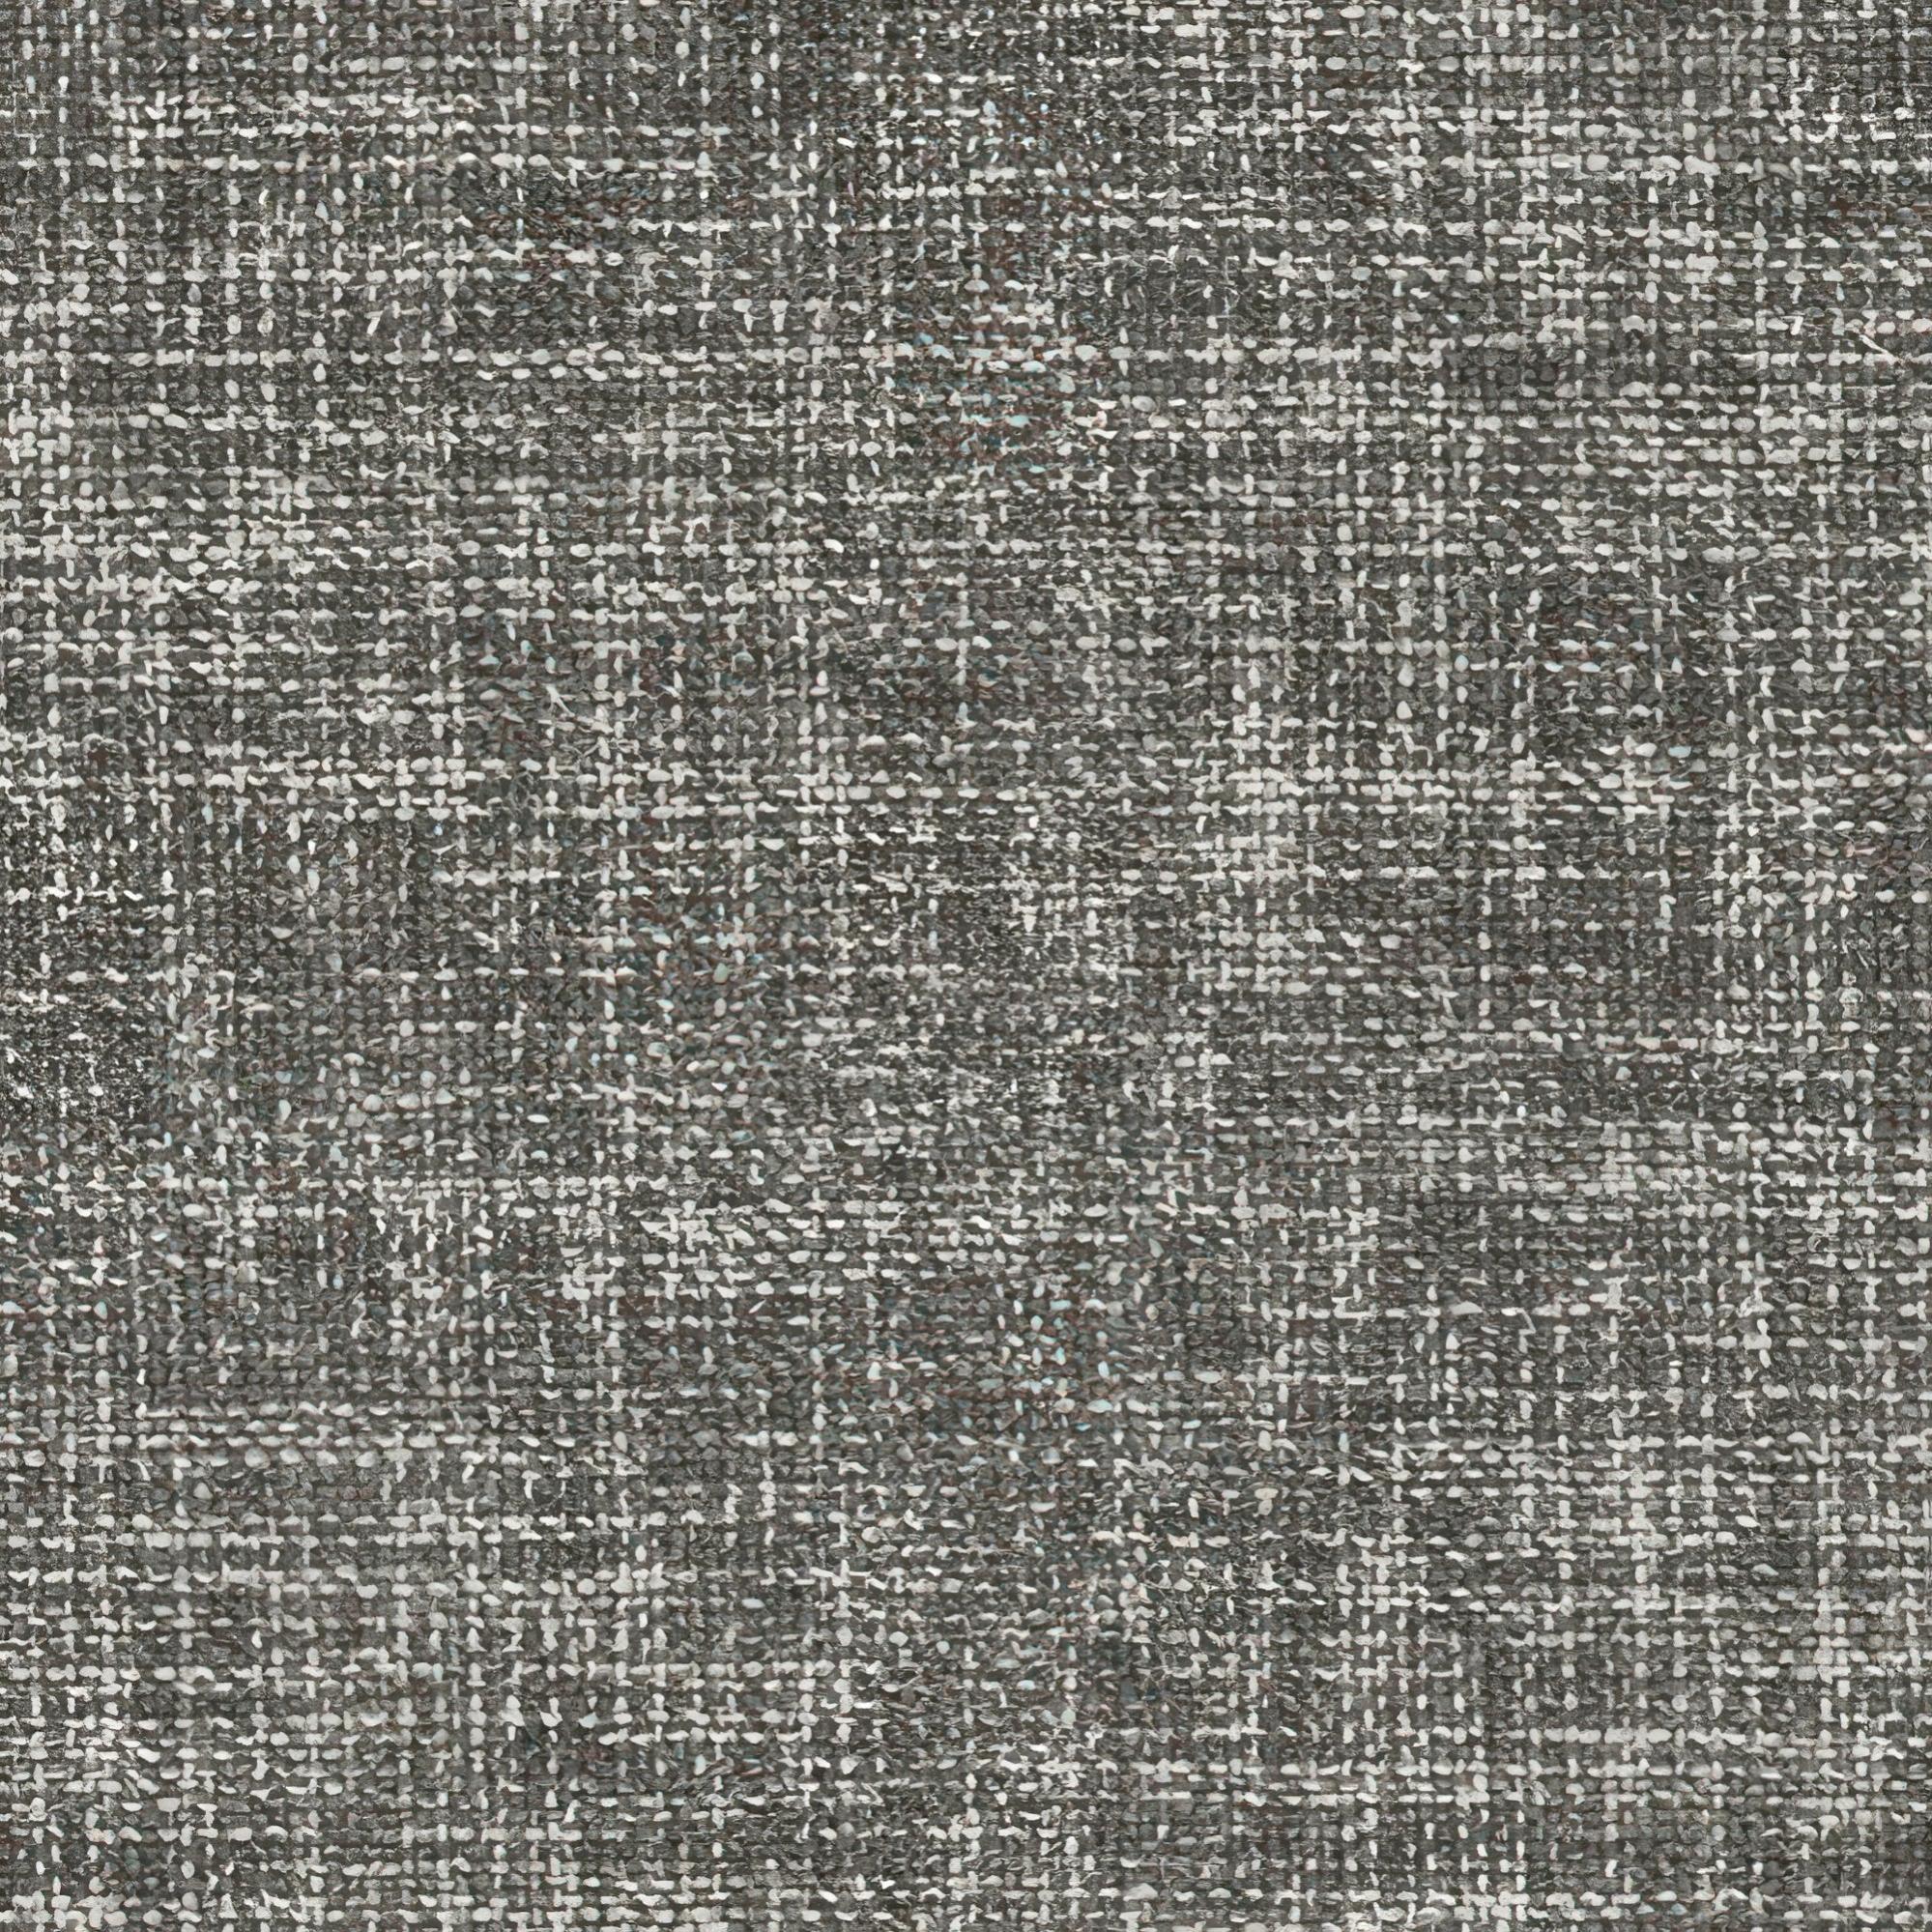 Tela al corte tapicería jacquard angers gris ancho 140 cm